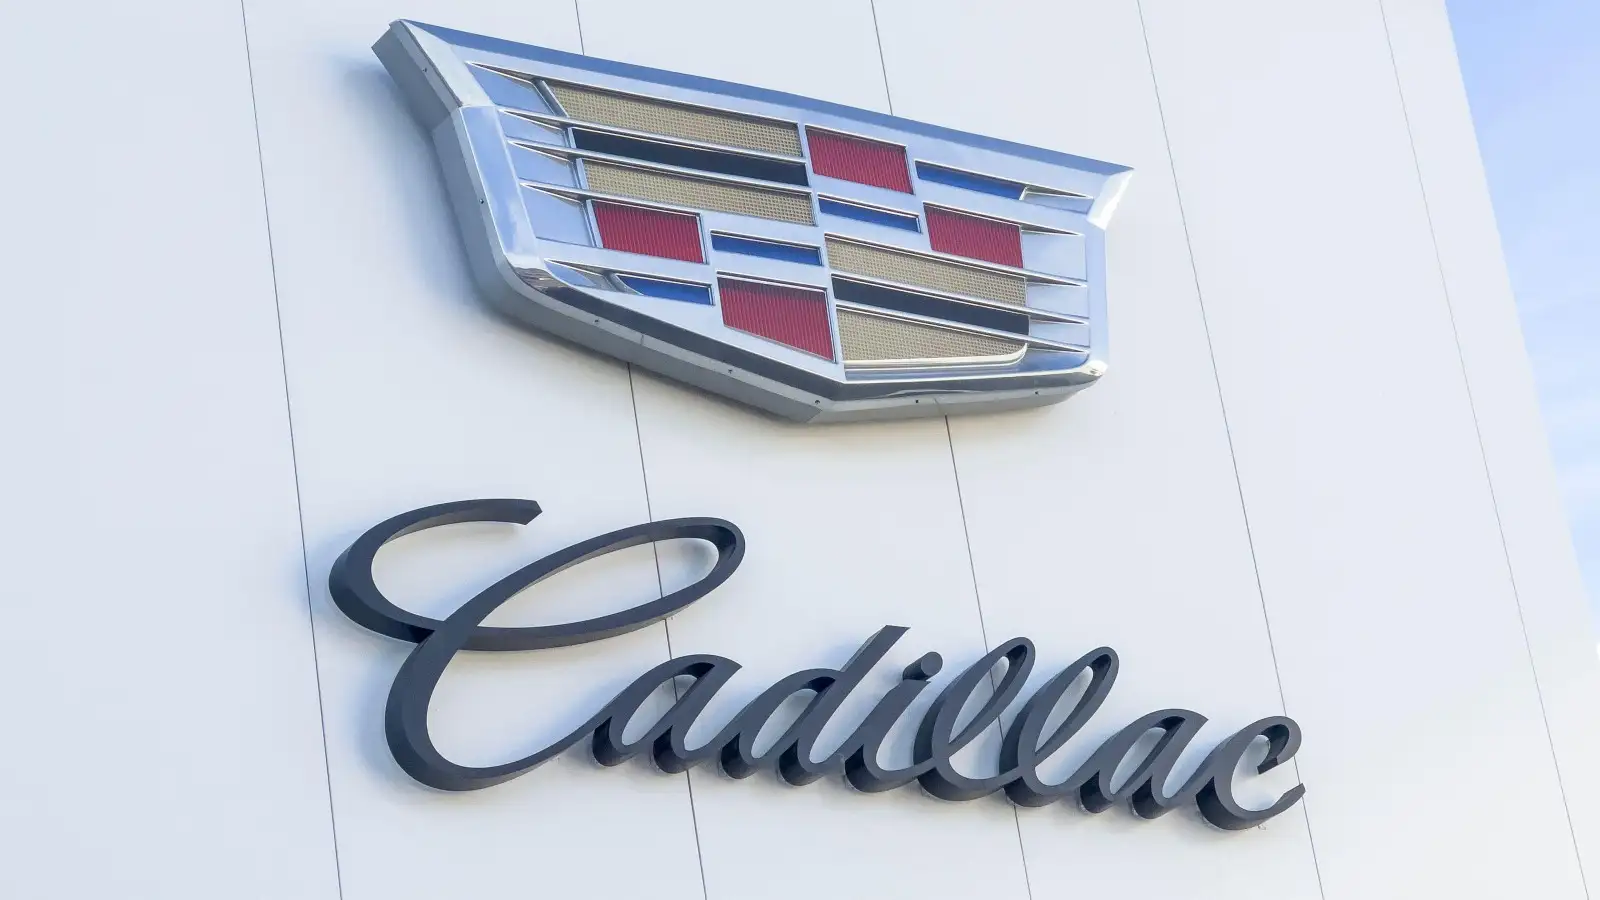 Cadillac dealership building exterior with logo. October 2022.